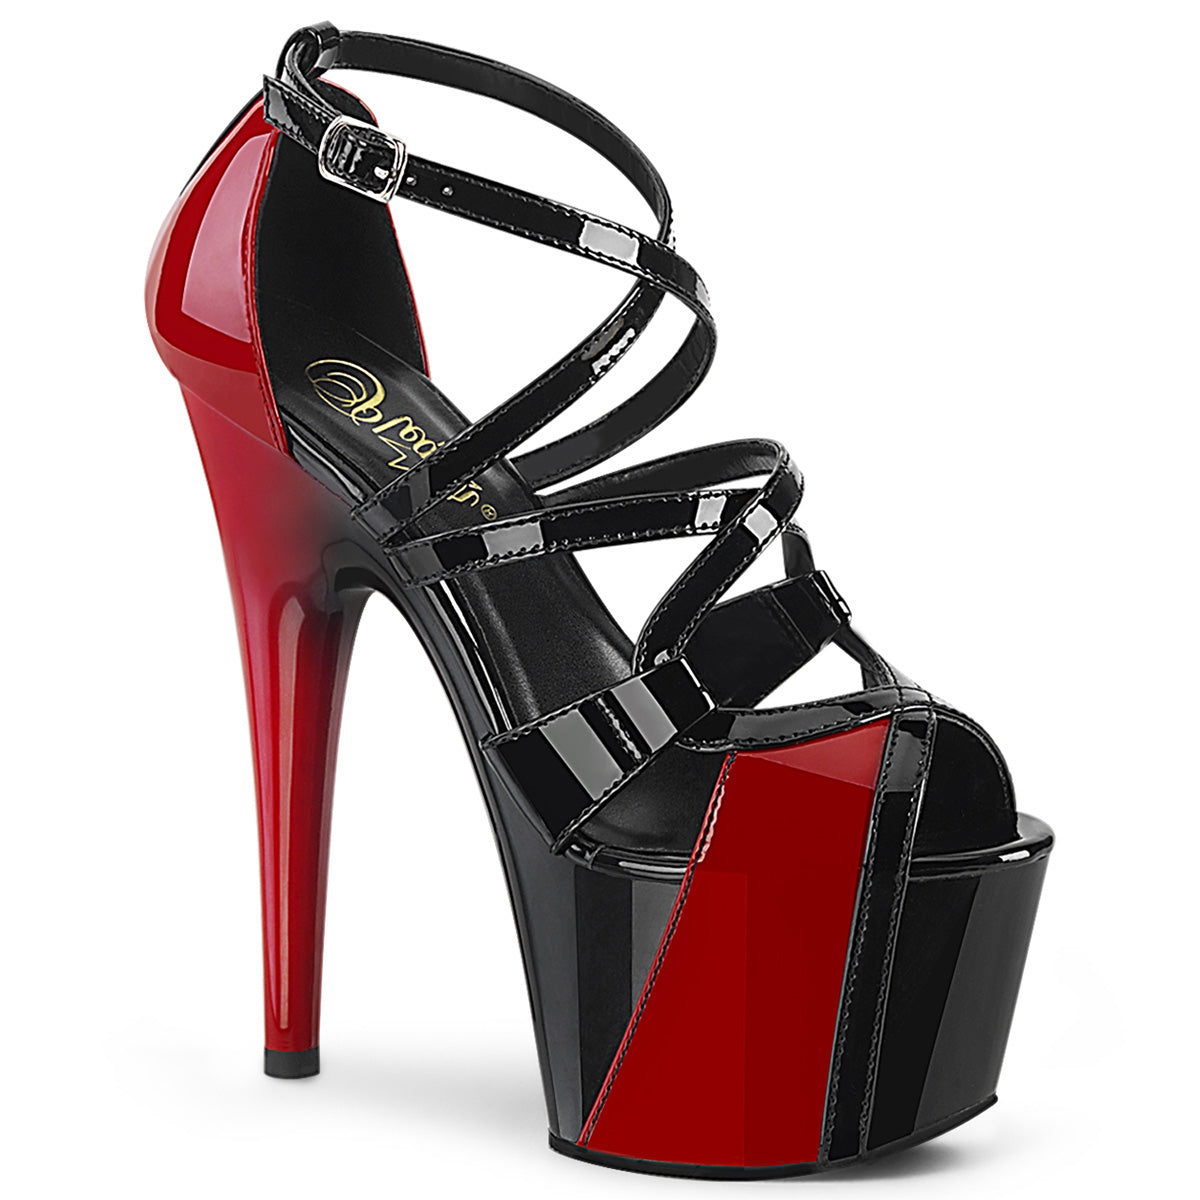 Adore-764 plezierig 7 "Heel zwarte en rode strippers sandalen